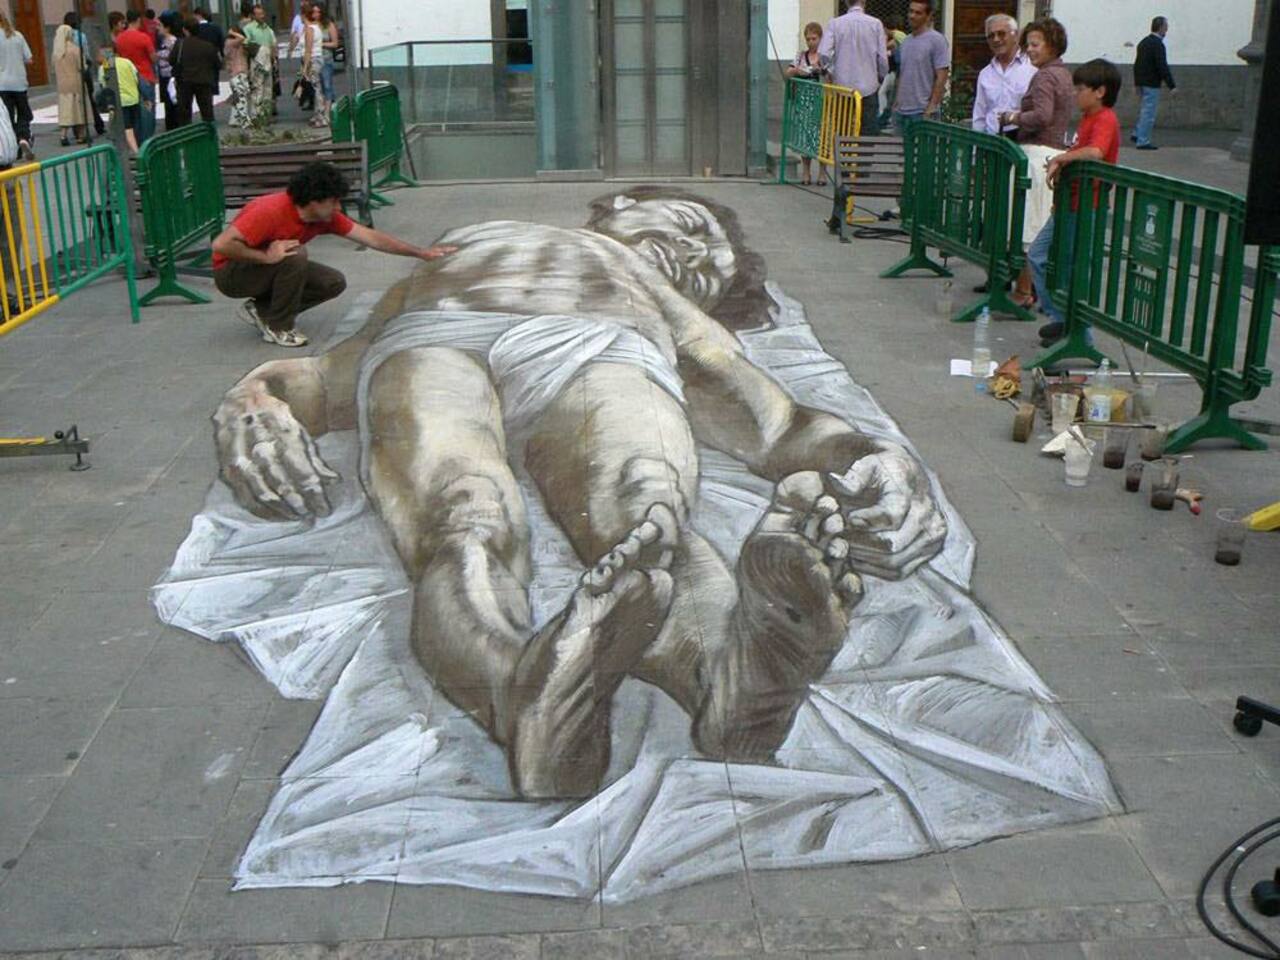 ... perspectives. Art by Eduardo Relero #StreetArt #Art #Perspectives #Realism #Anatomy #graffiti #Mural #UrbanArt https://t.co/tzlM4h9vaW